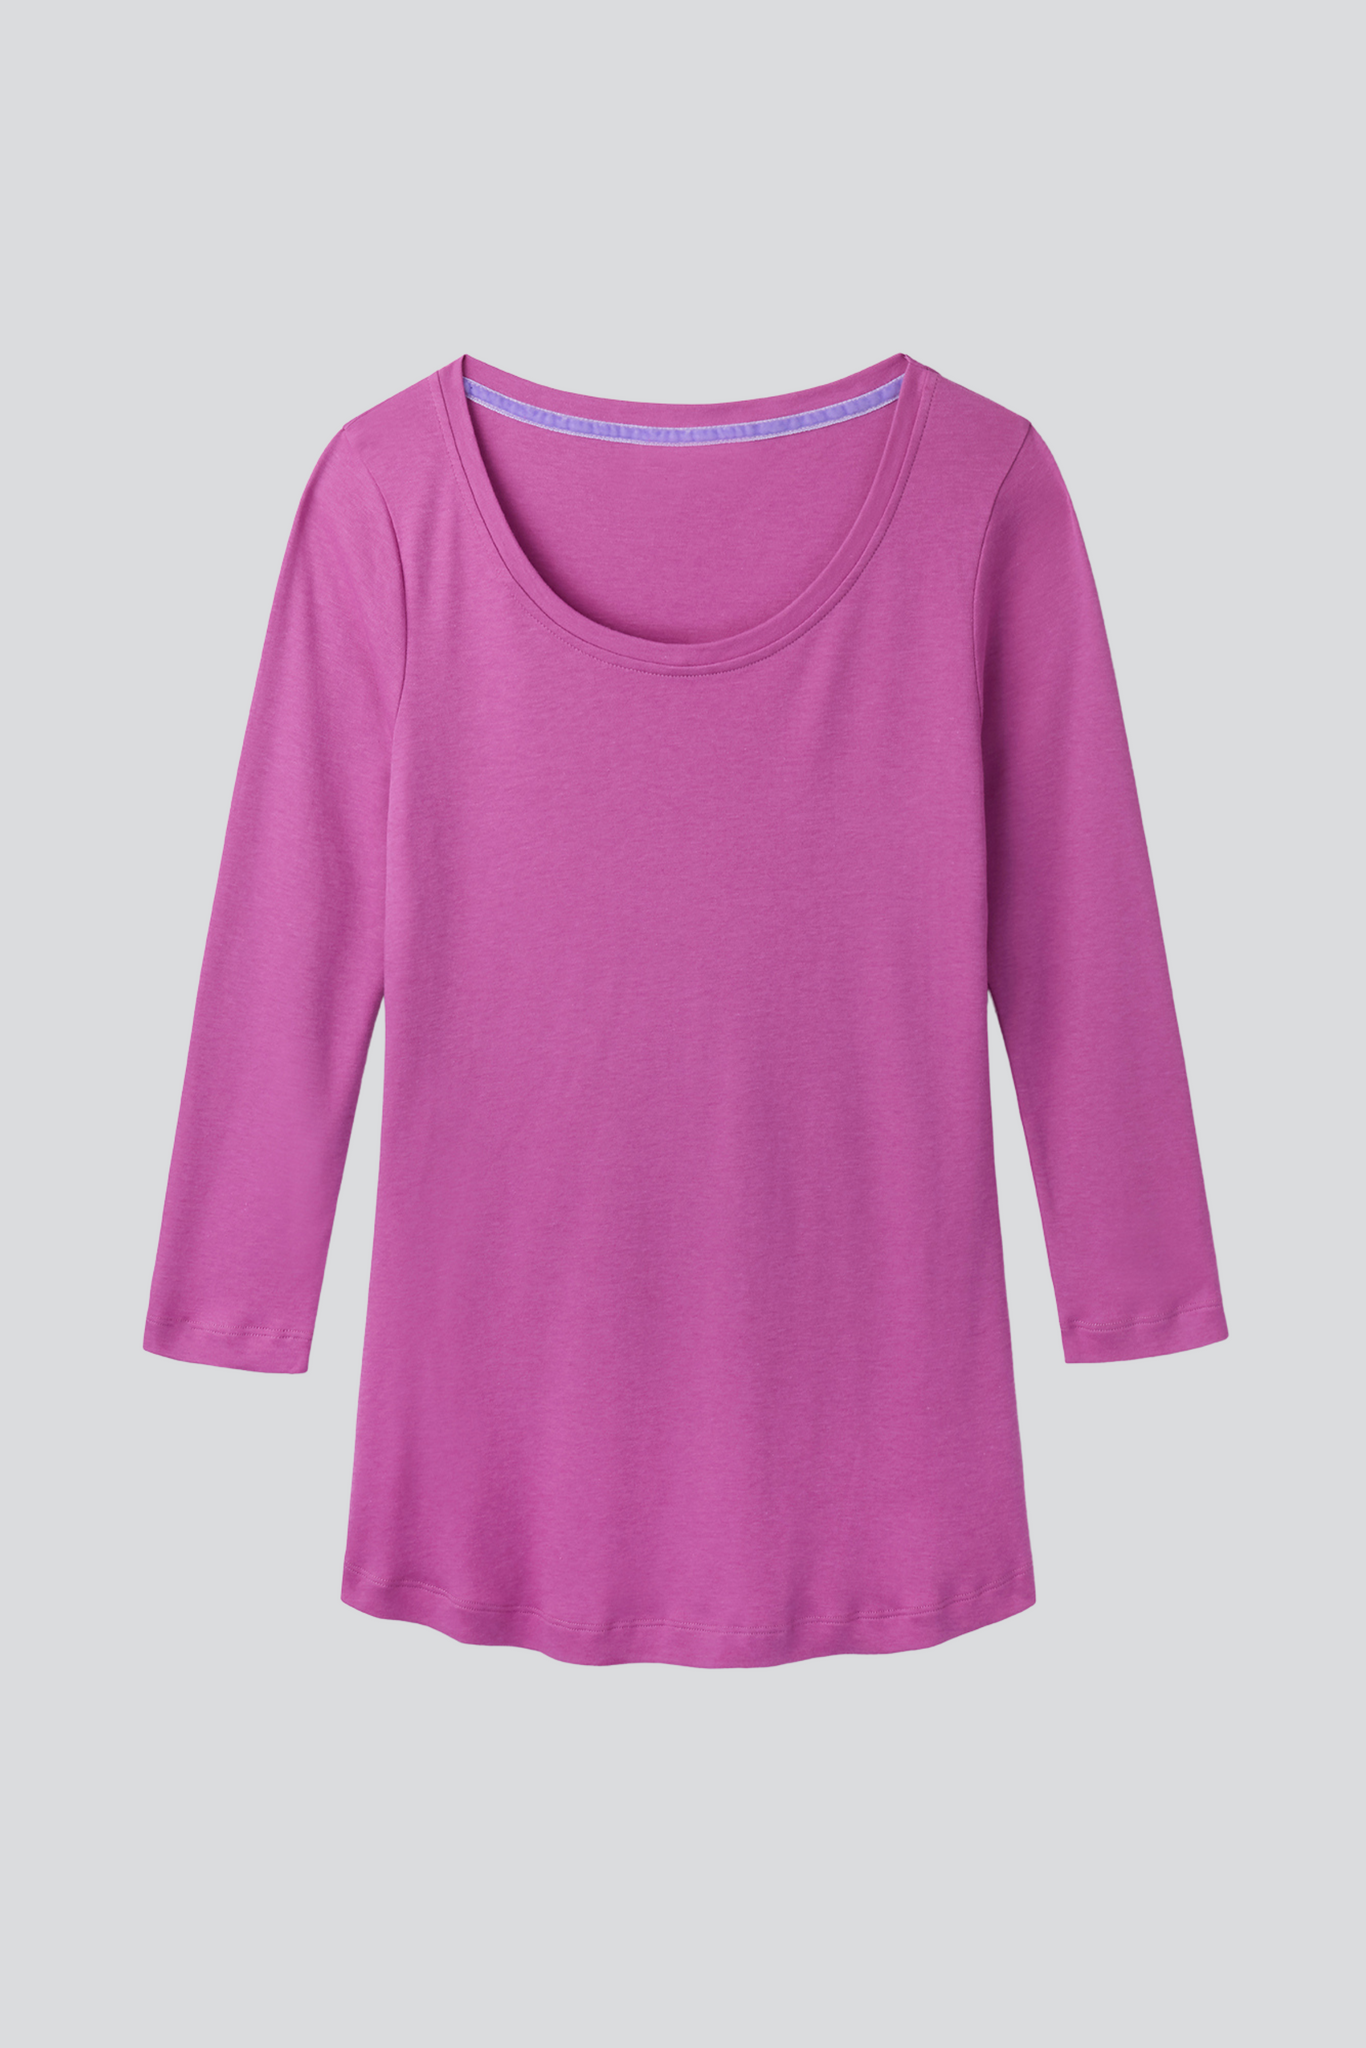 BKE Scoop Neck T-Shirt - Women's T-Shirts in Dusty Rose Mauve